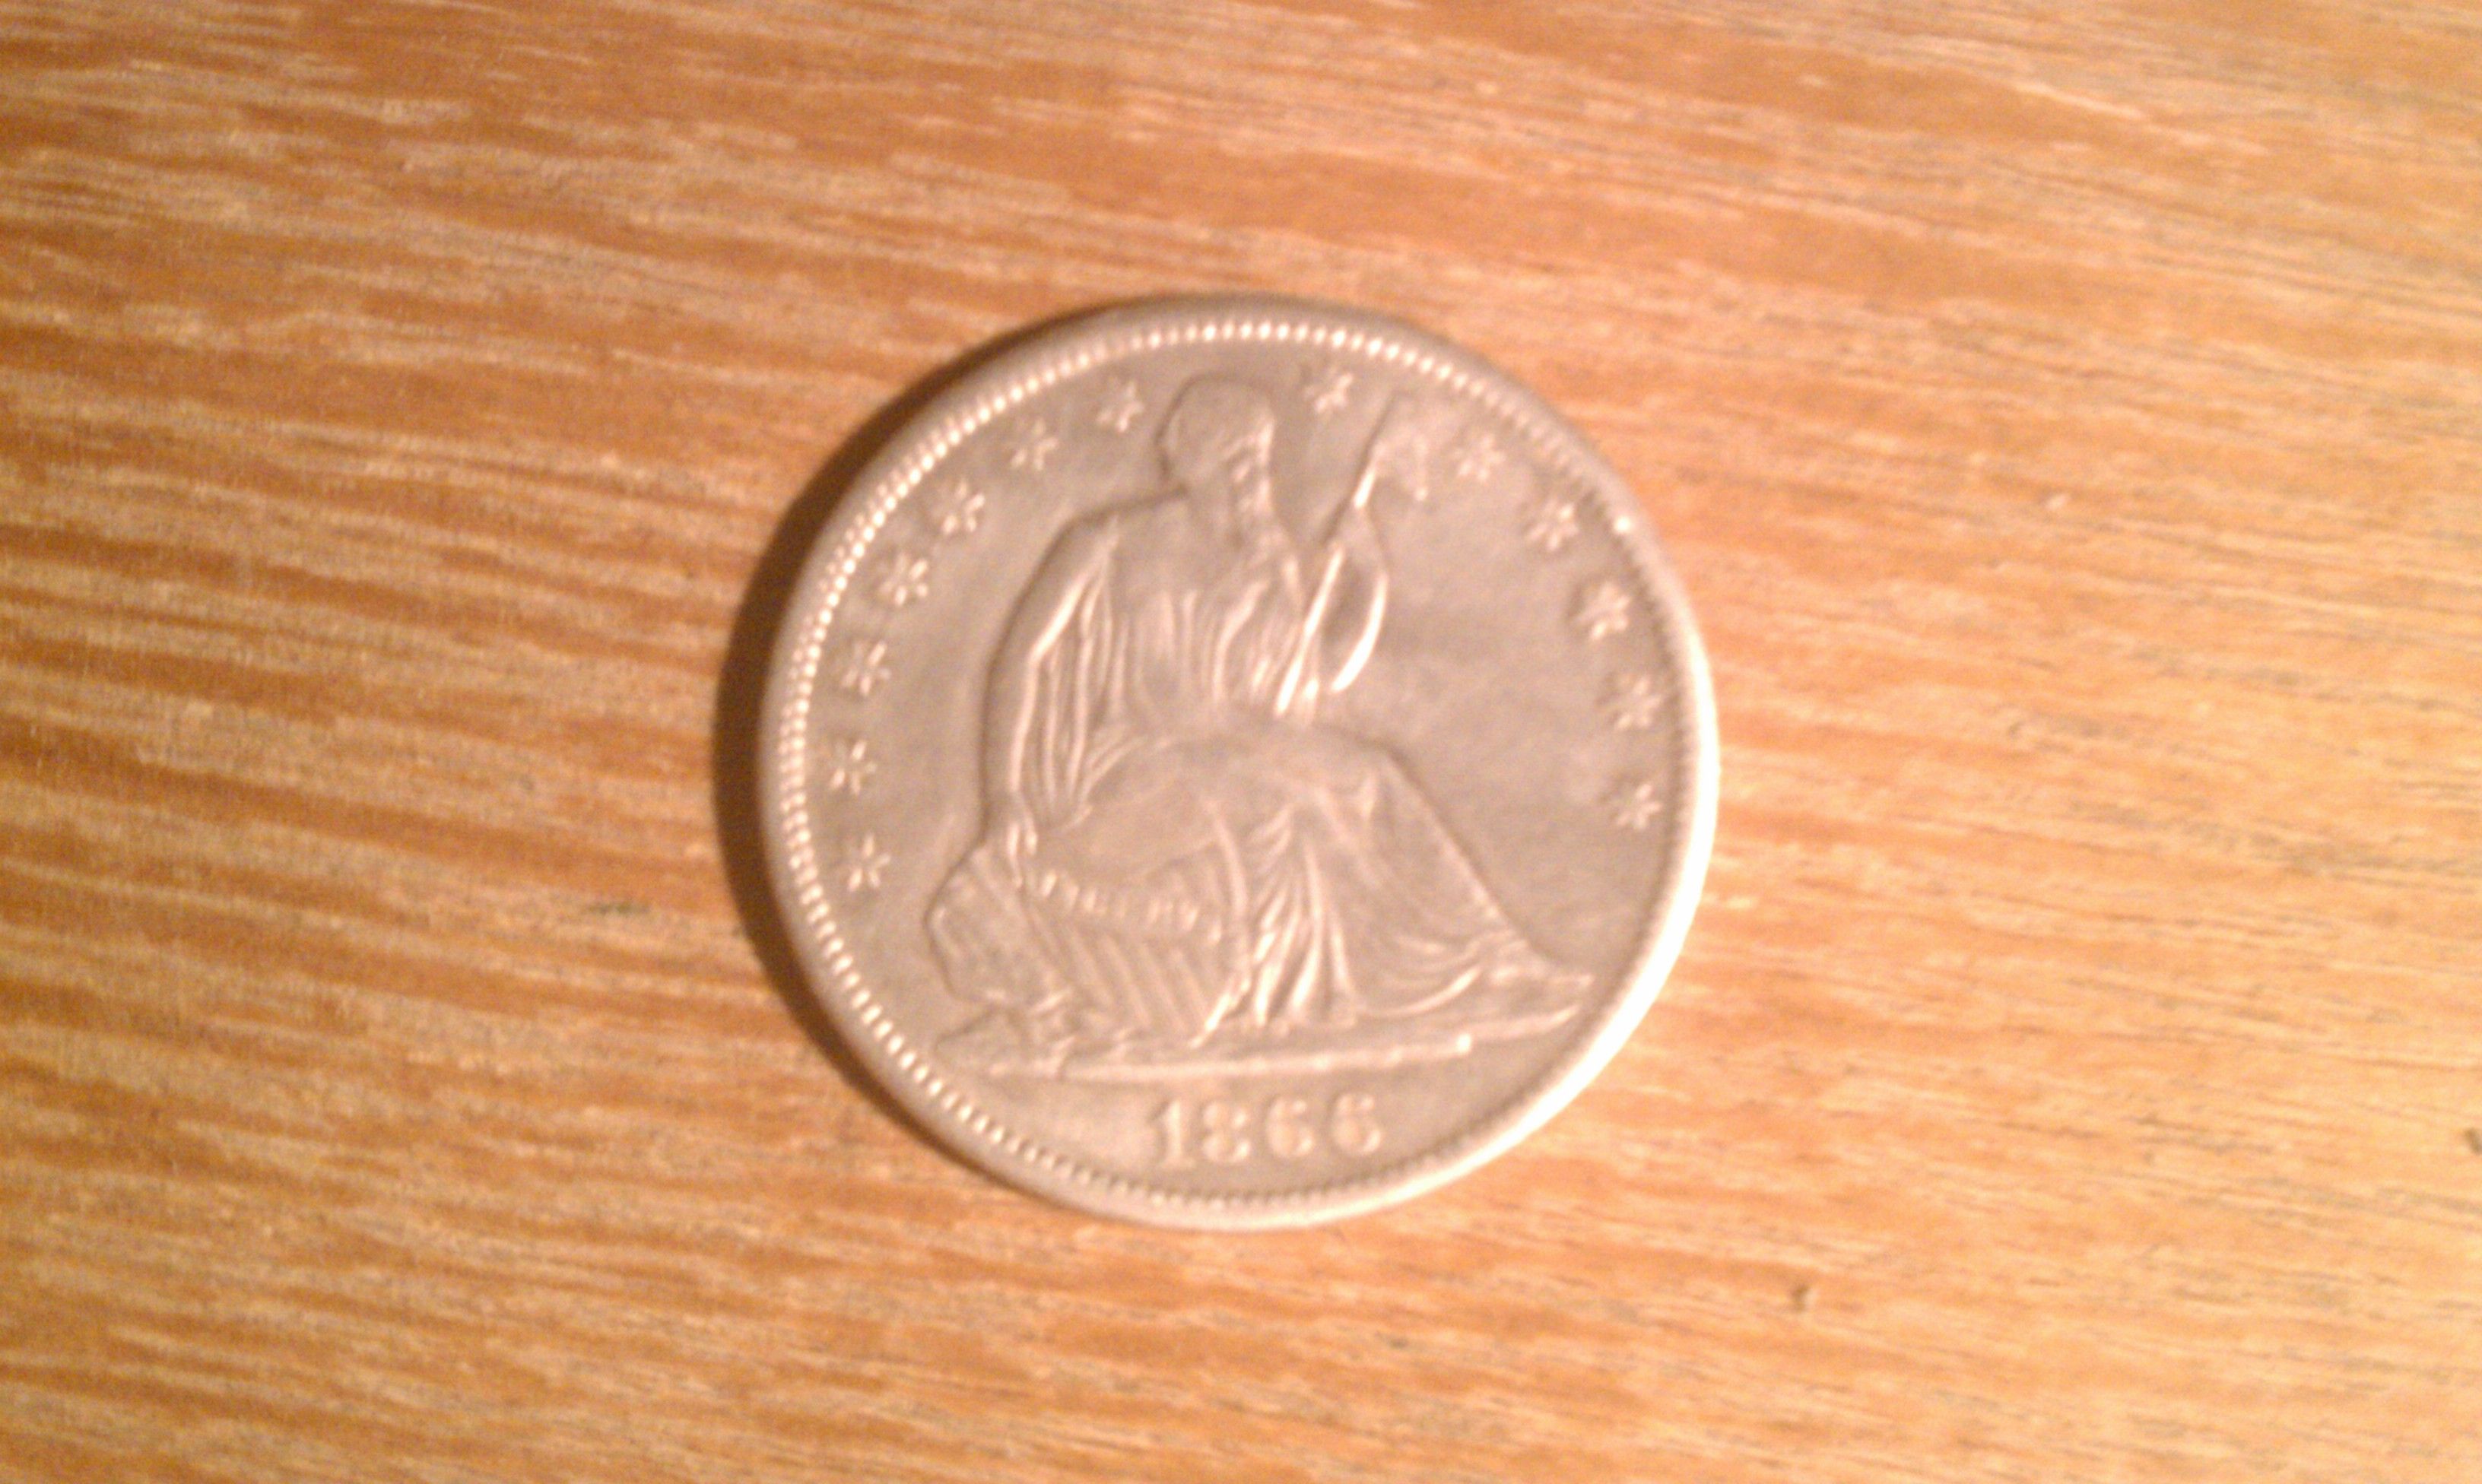 1866 seated half-dollar